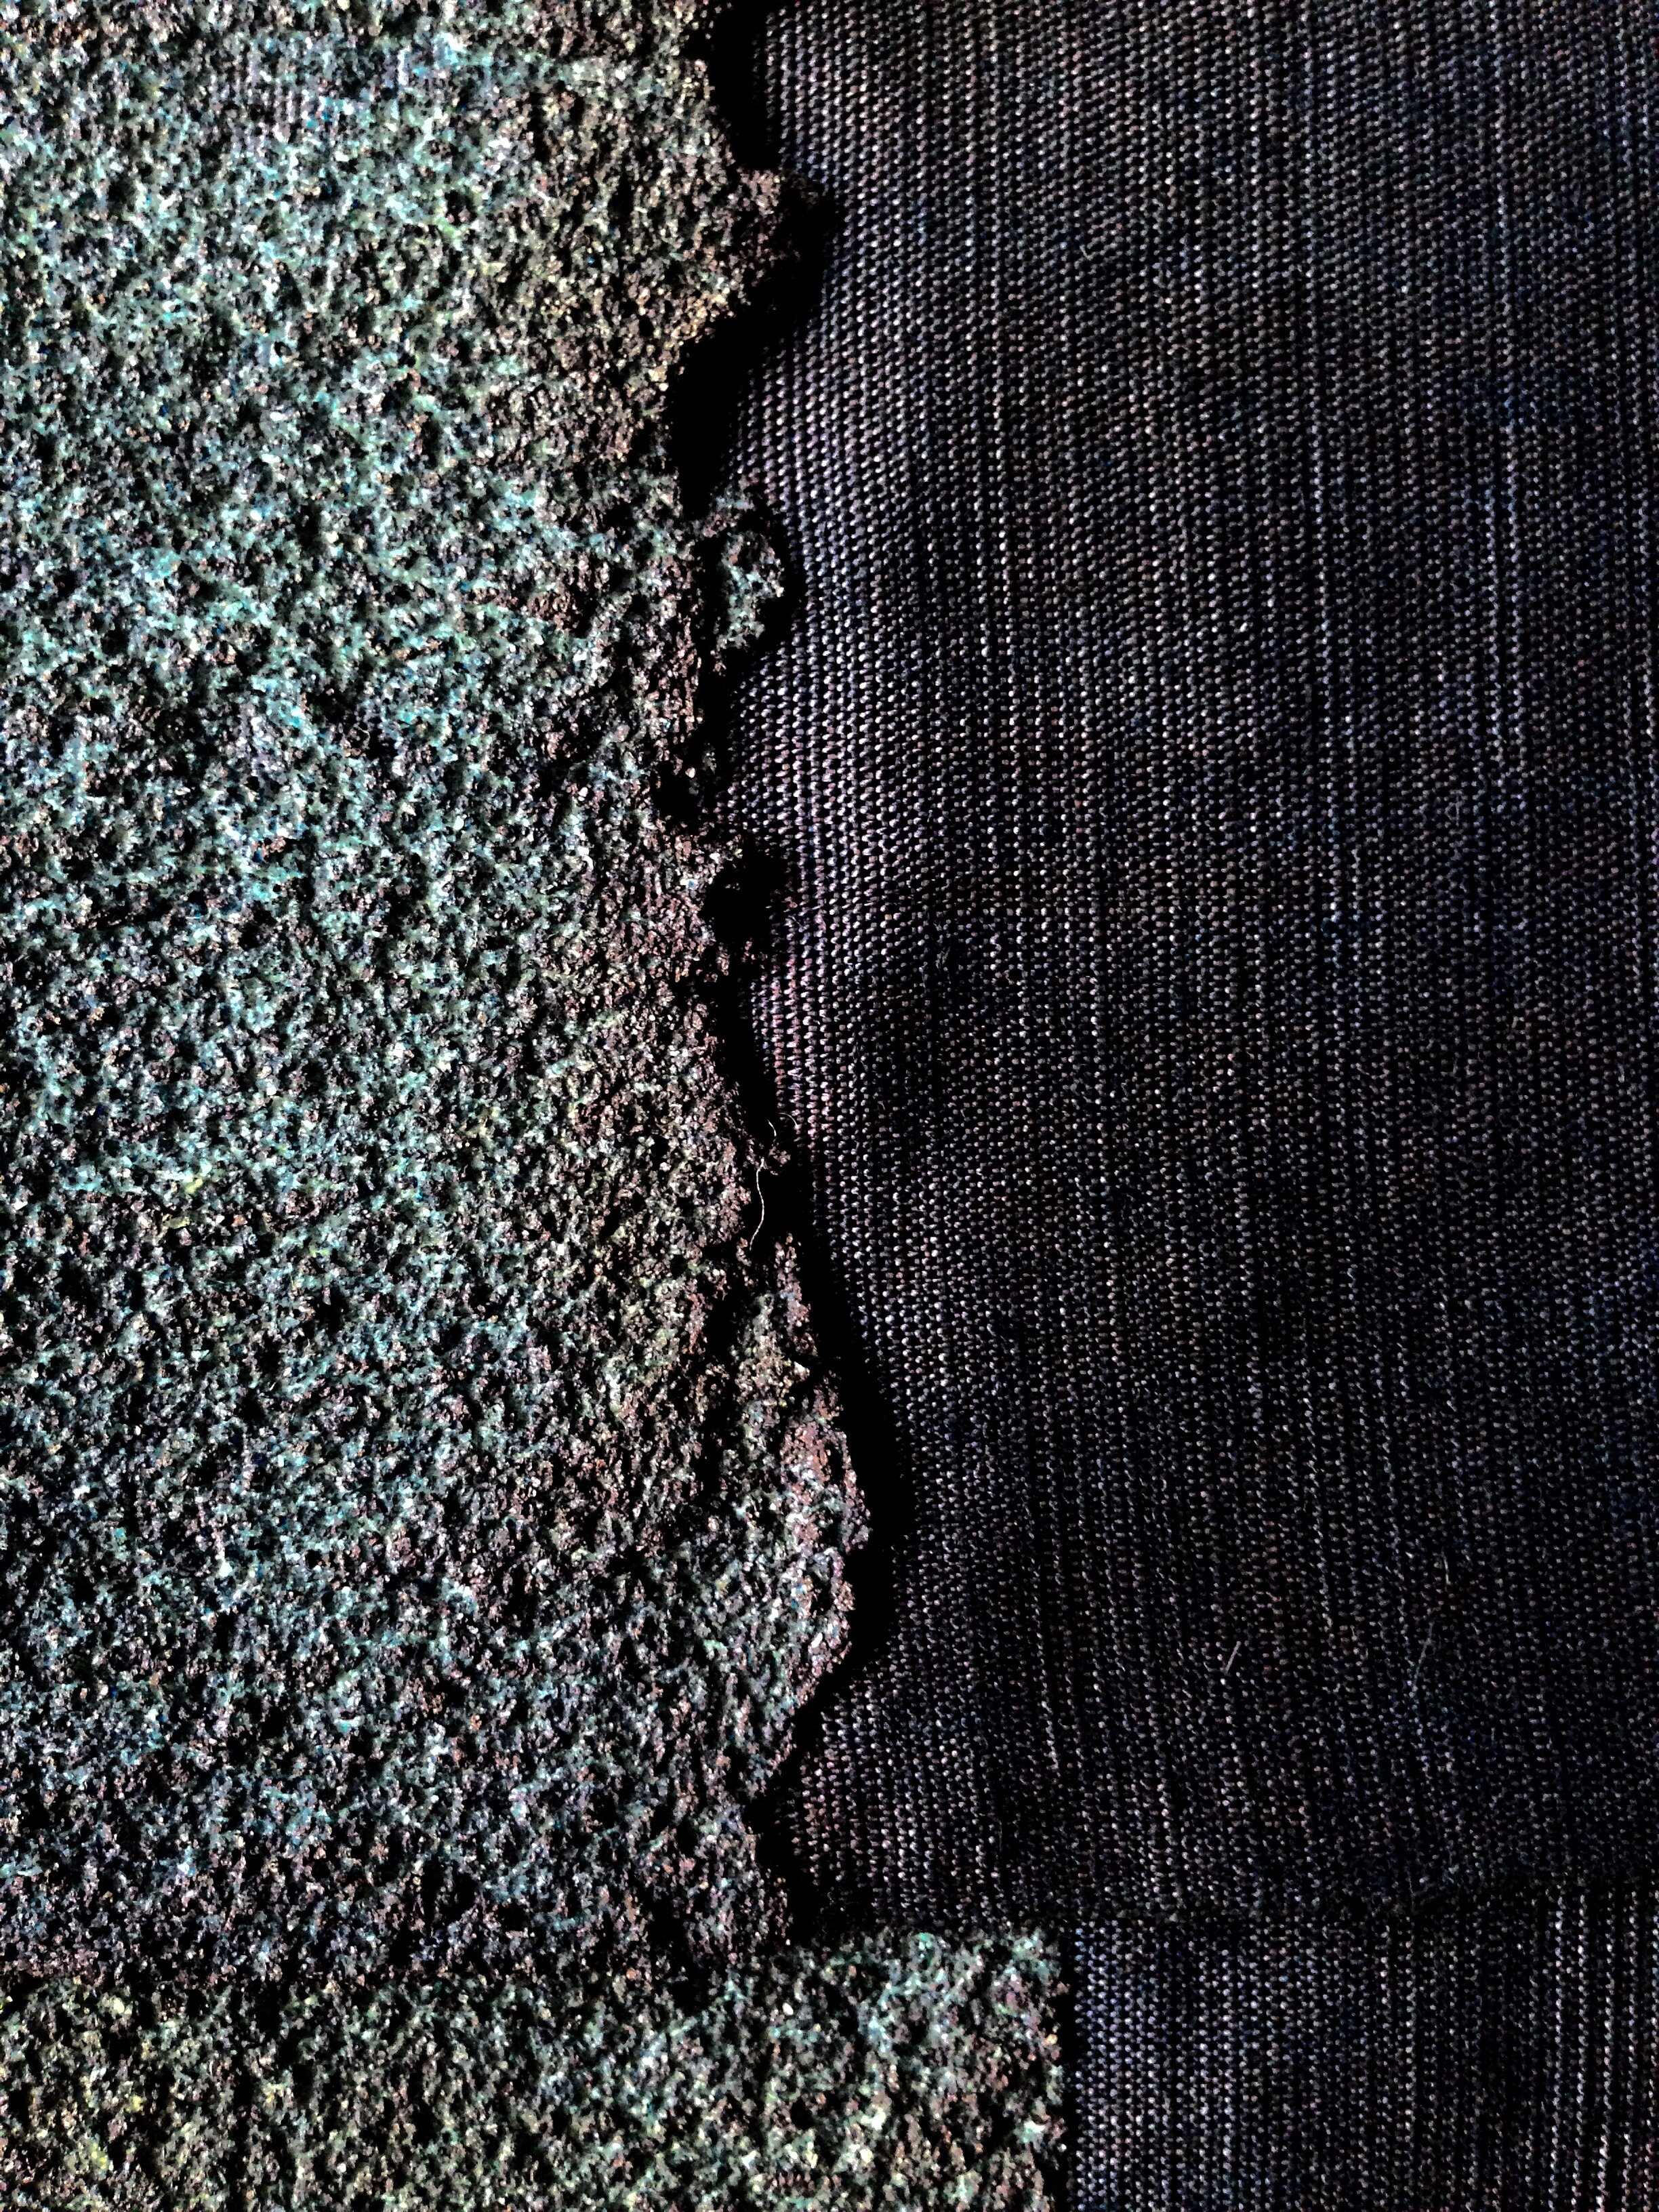 Linda Brassington, 'Encrusted' (2016), indigo over pumice and acrylic on cotton.jpeg